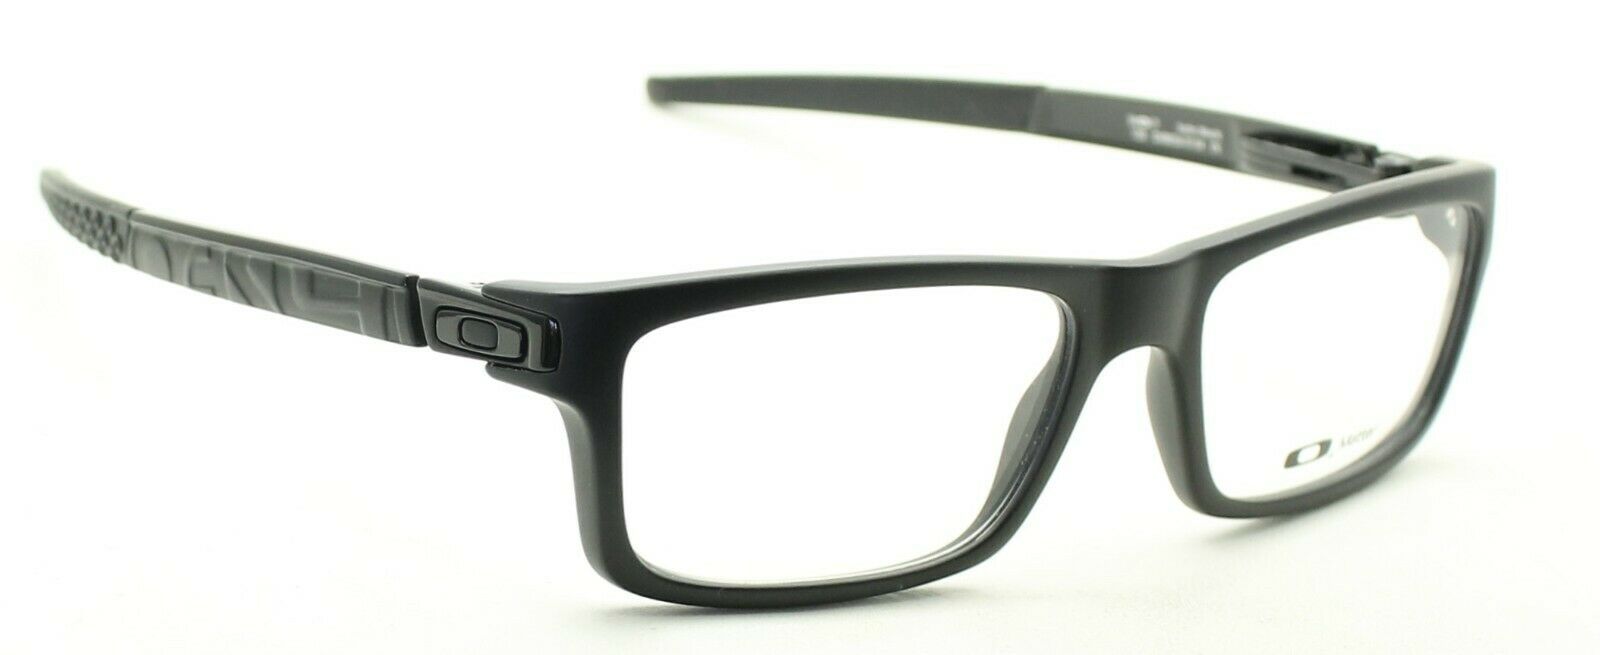 Oakley Currency Ox8026 0154 Eyewear Frames Rx Optical Eyeglasses Glasses New Ggv Eyewear